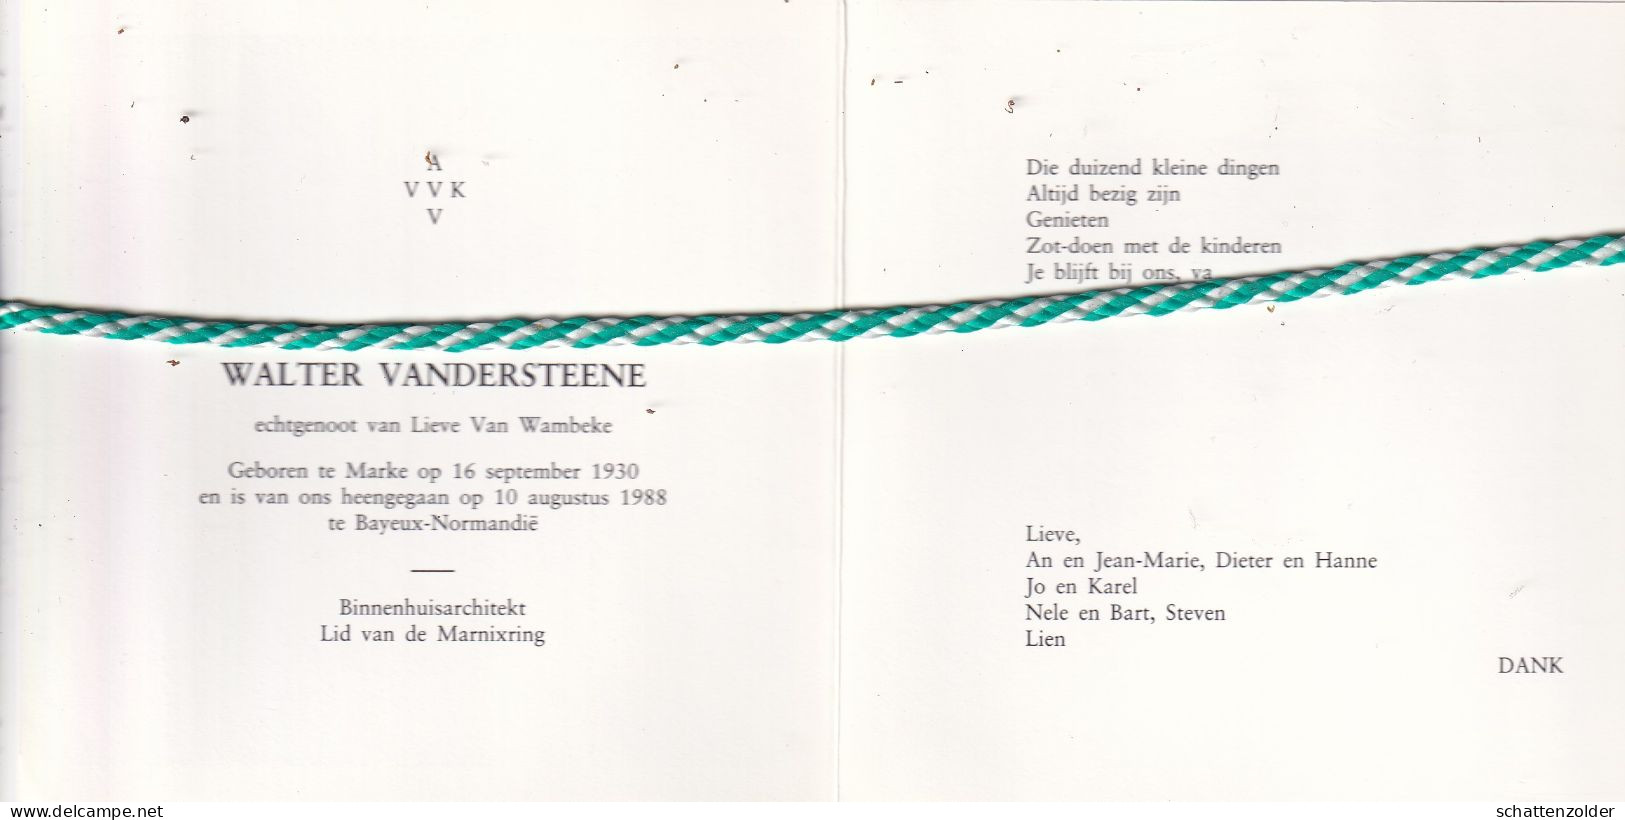 Walter Vandersteene-Van Wambeke, Marke 1930, Bayeux-Normandië 1988. Binnenhuisarchitect. AVV VVK. Foto - Obituary Notices